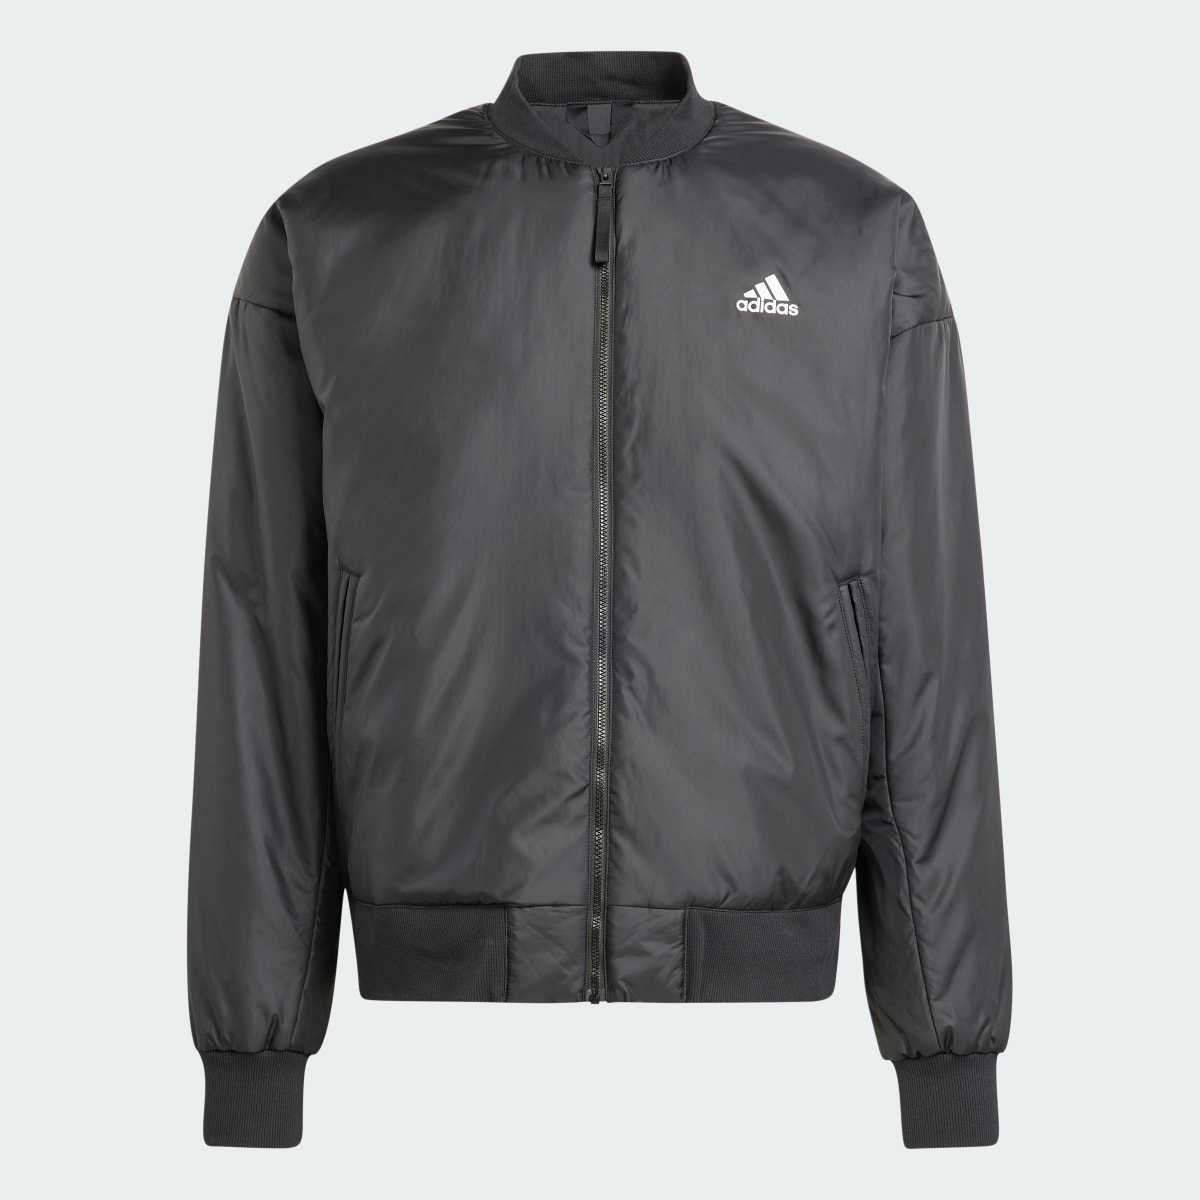 Adidas Brand Love Bomber Jacket. 5